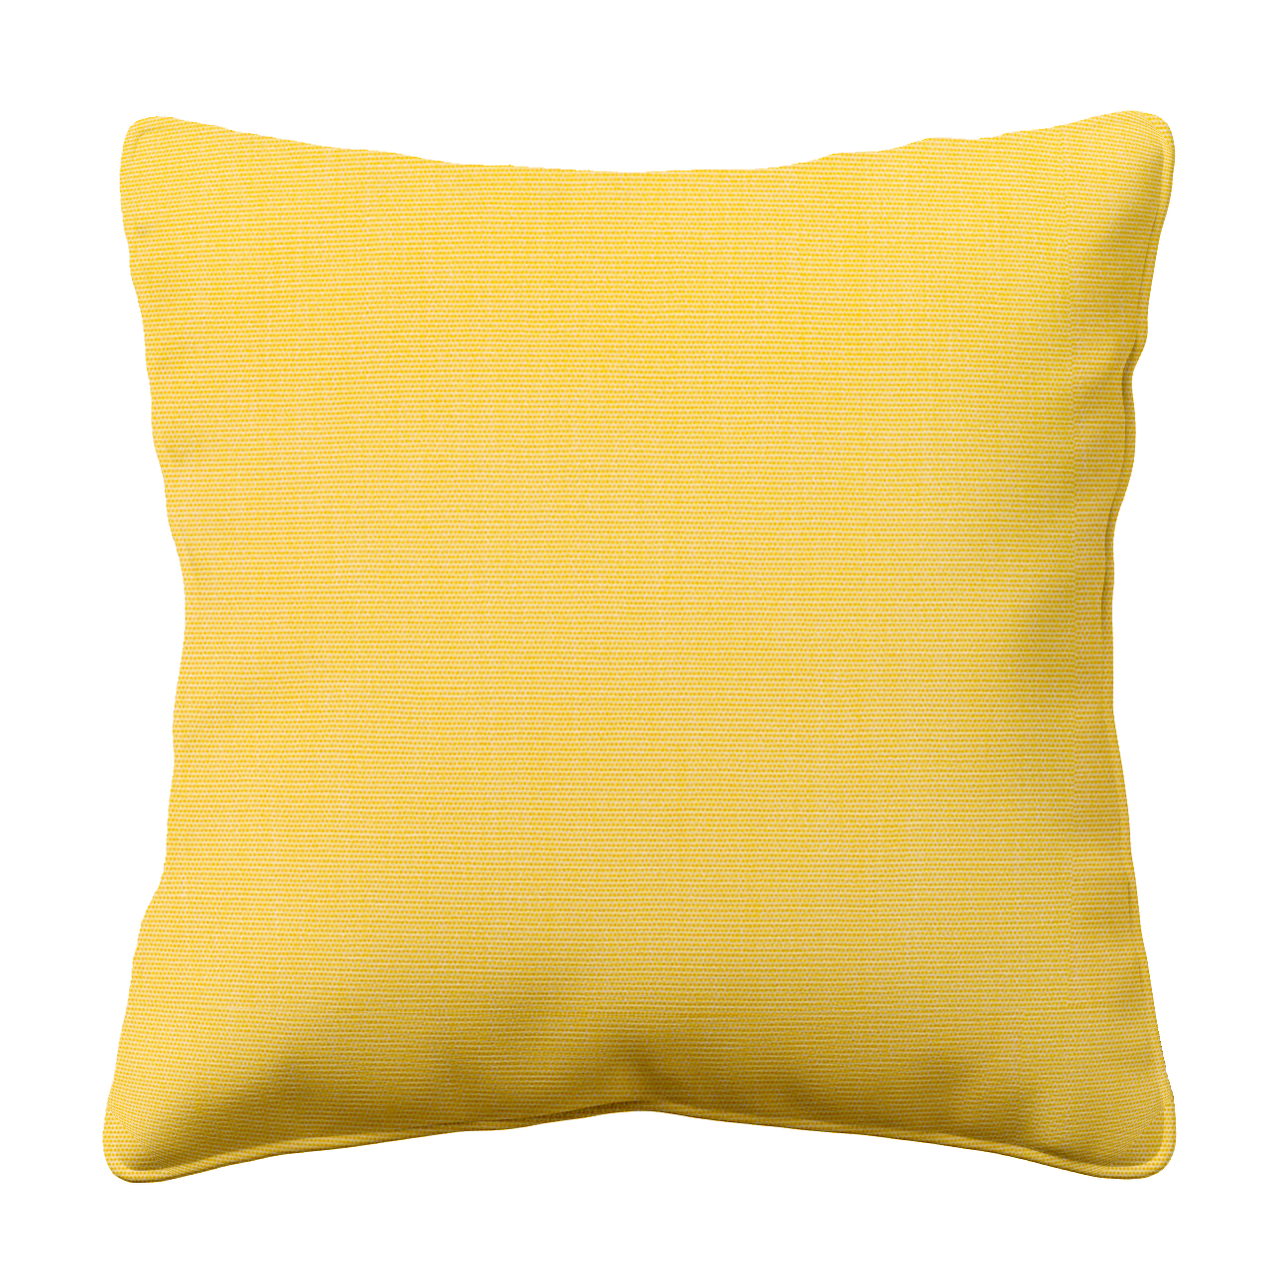 Canvas Buttercup Sunbrella Outdoor Cushion